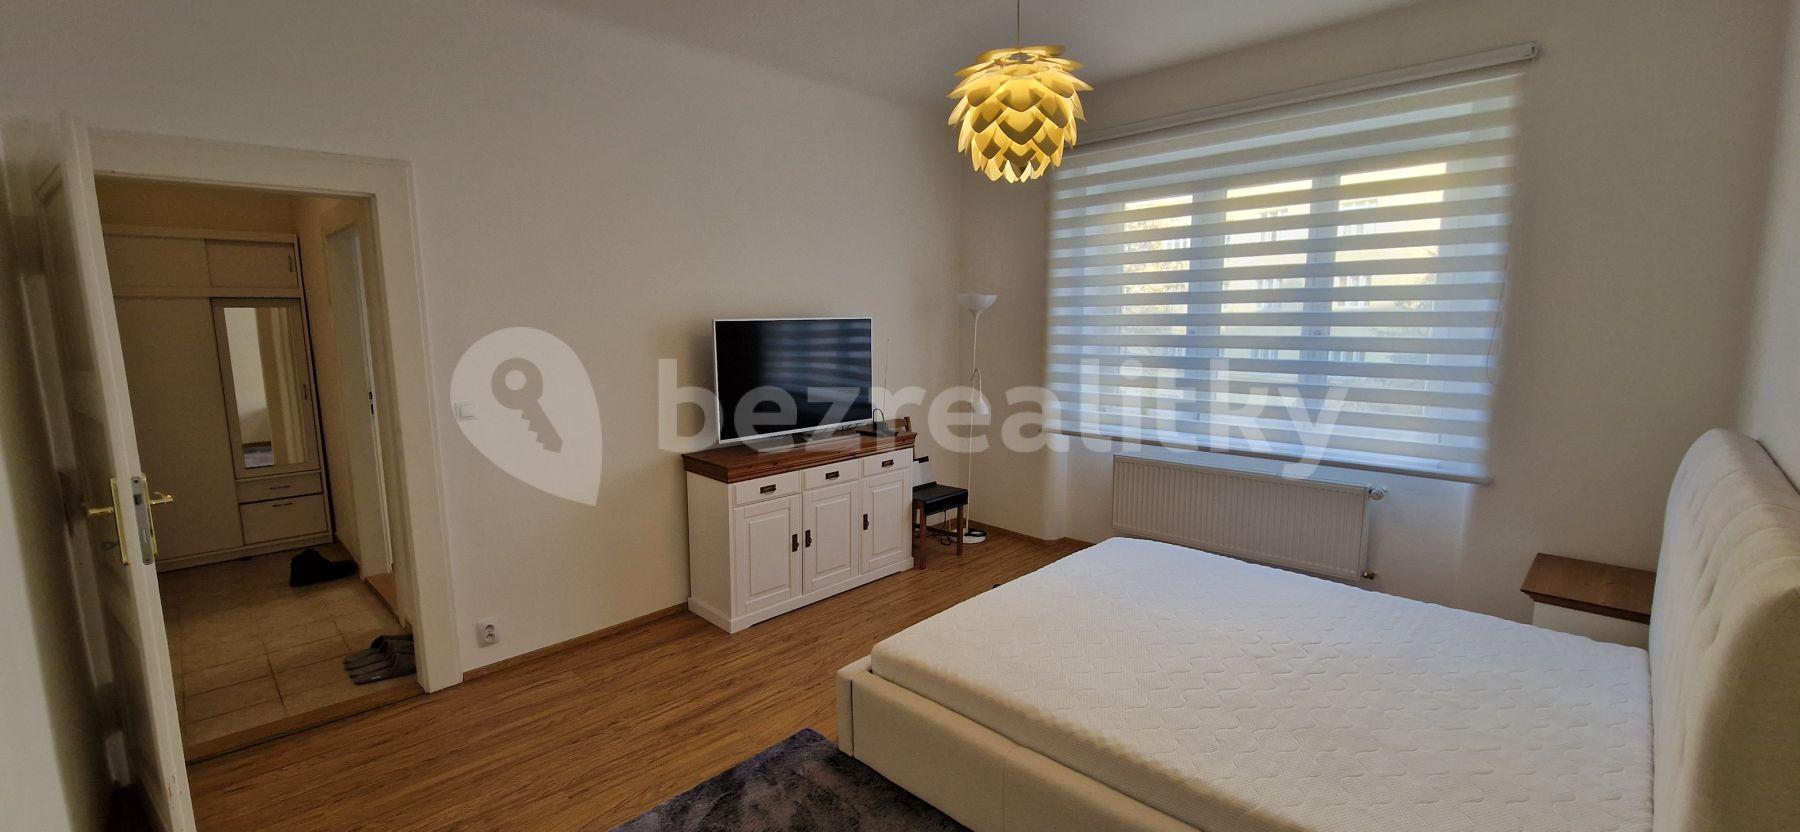 1 bedroom with open-plan kitchen flat to rent, 50 m², Vršovická, Prague, Prague